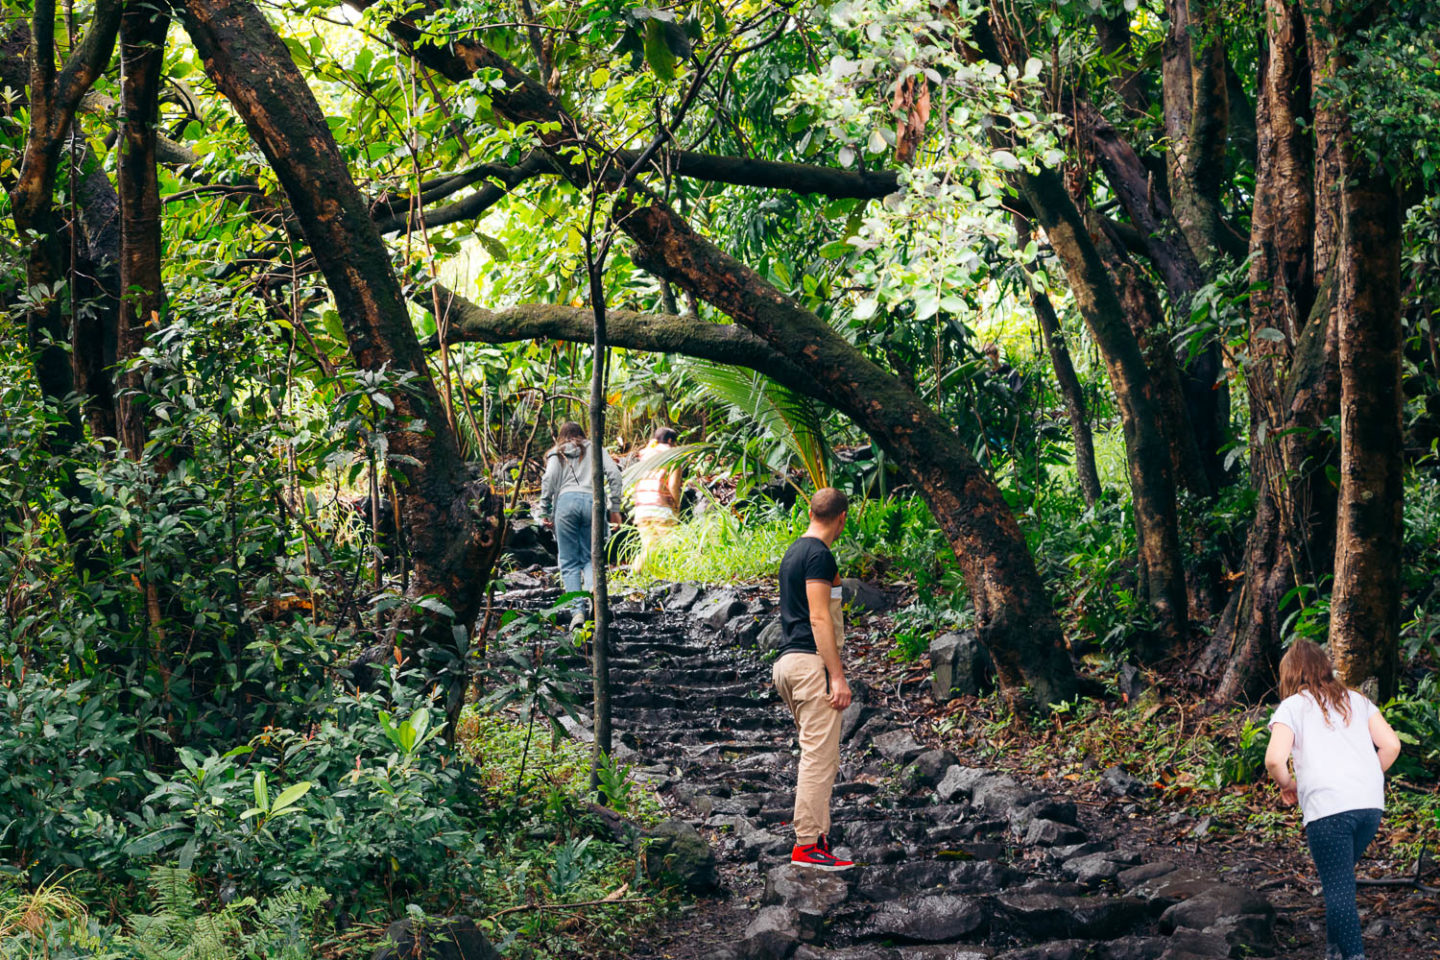 Pipiwai Trail hike; Forest bathing on Maui - Roads and Destinations